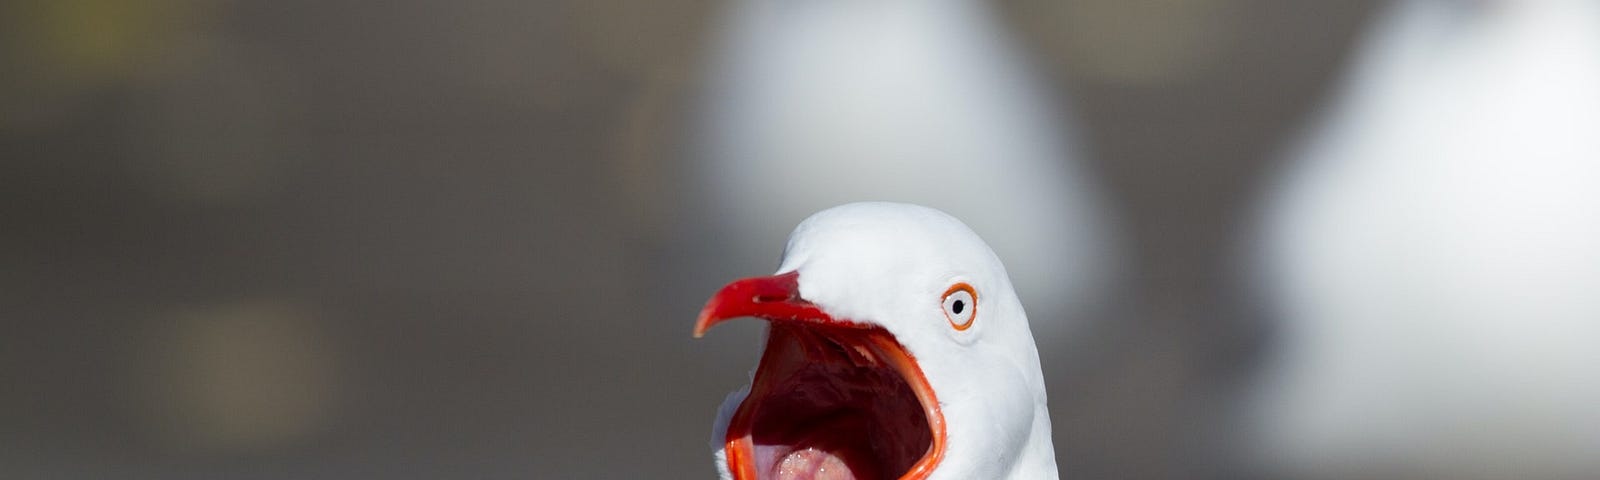 scream loud seagull